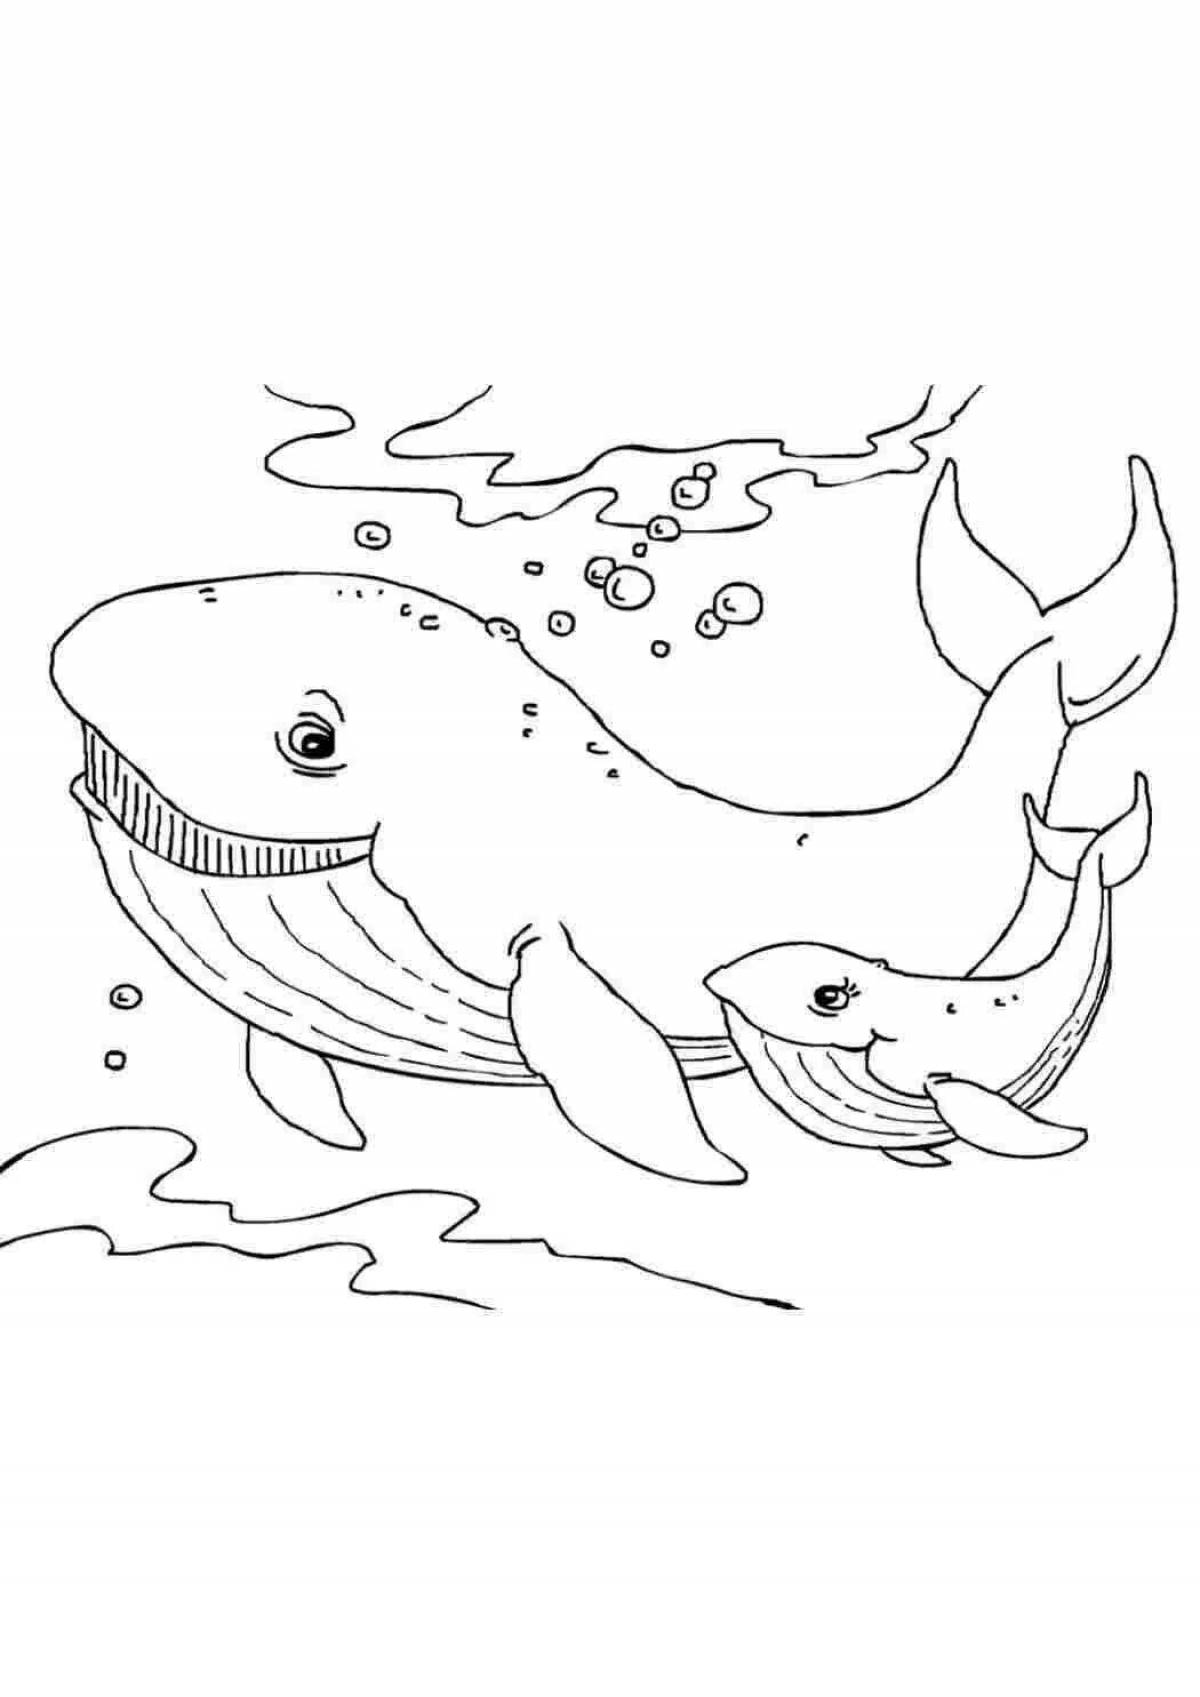 Блестящая раскраска рисунок кита